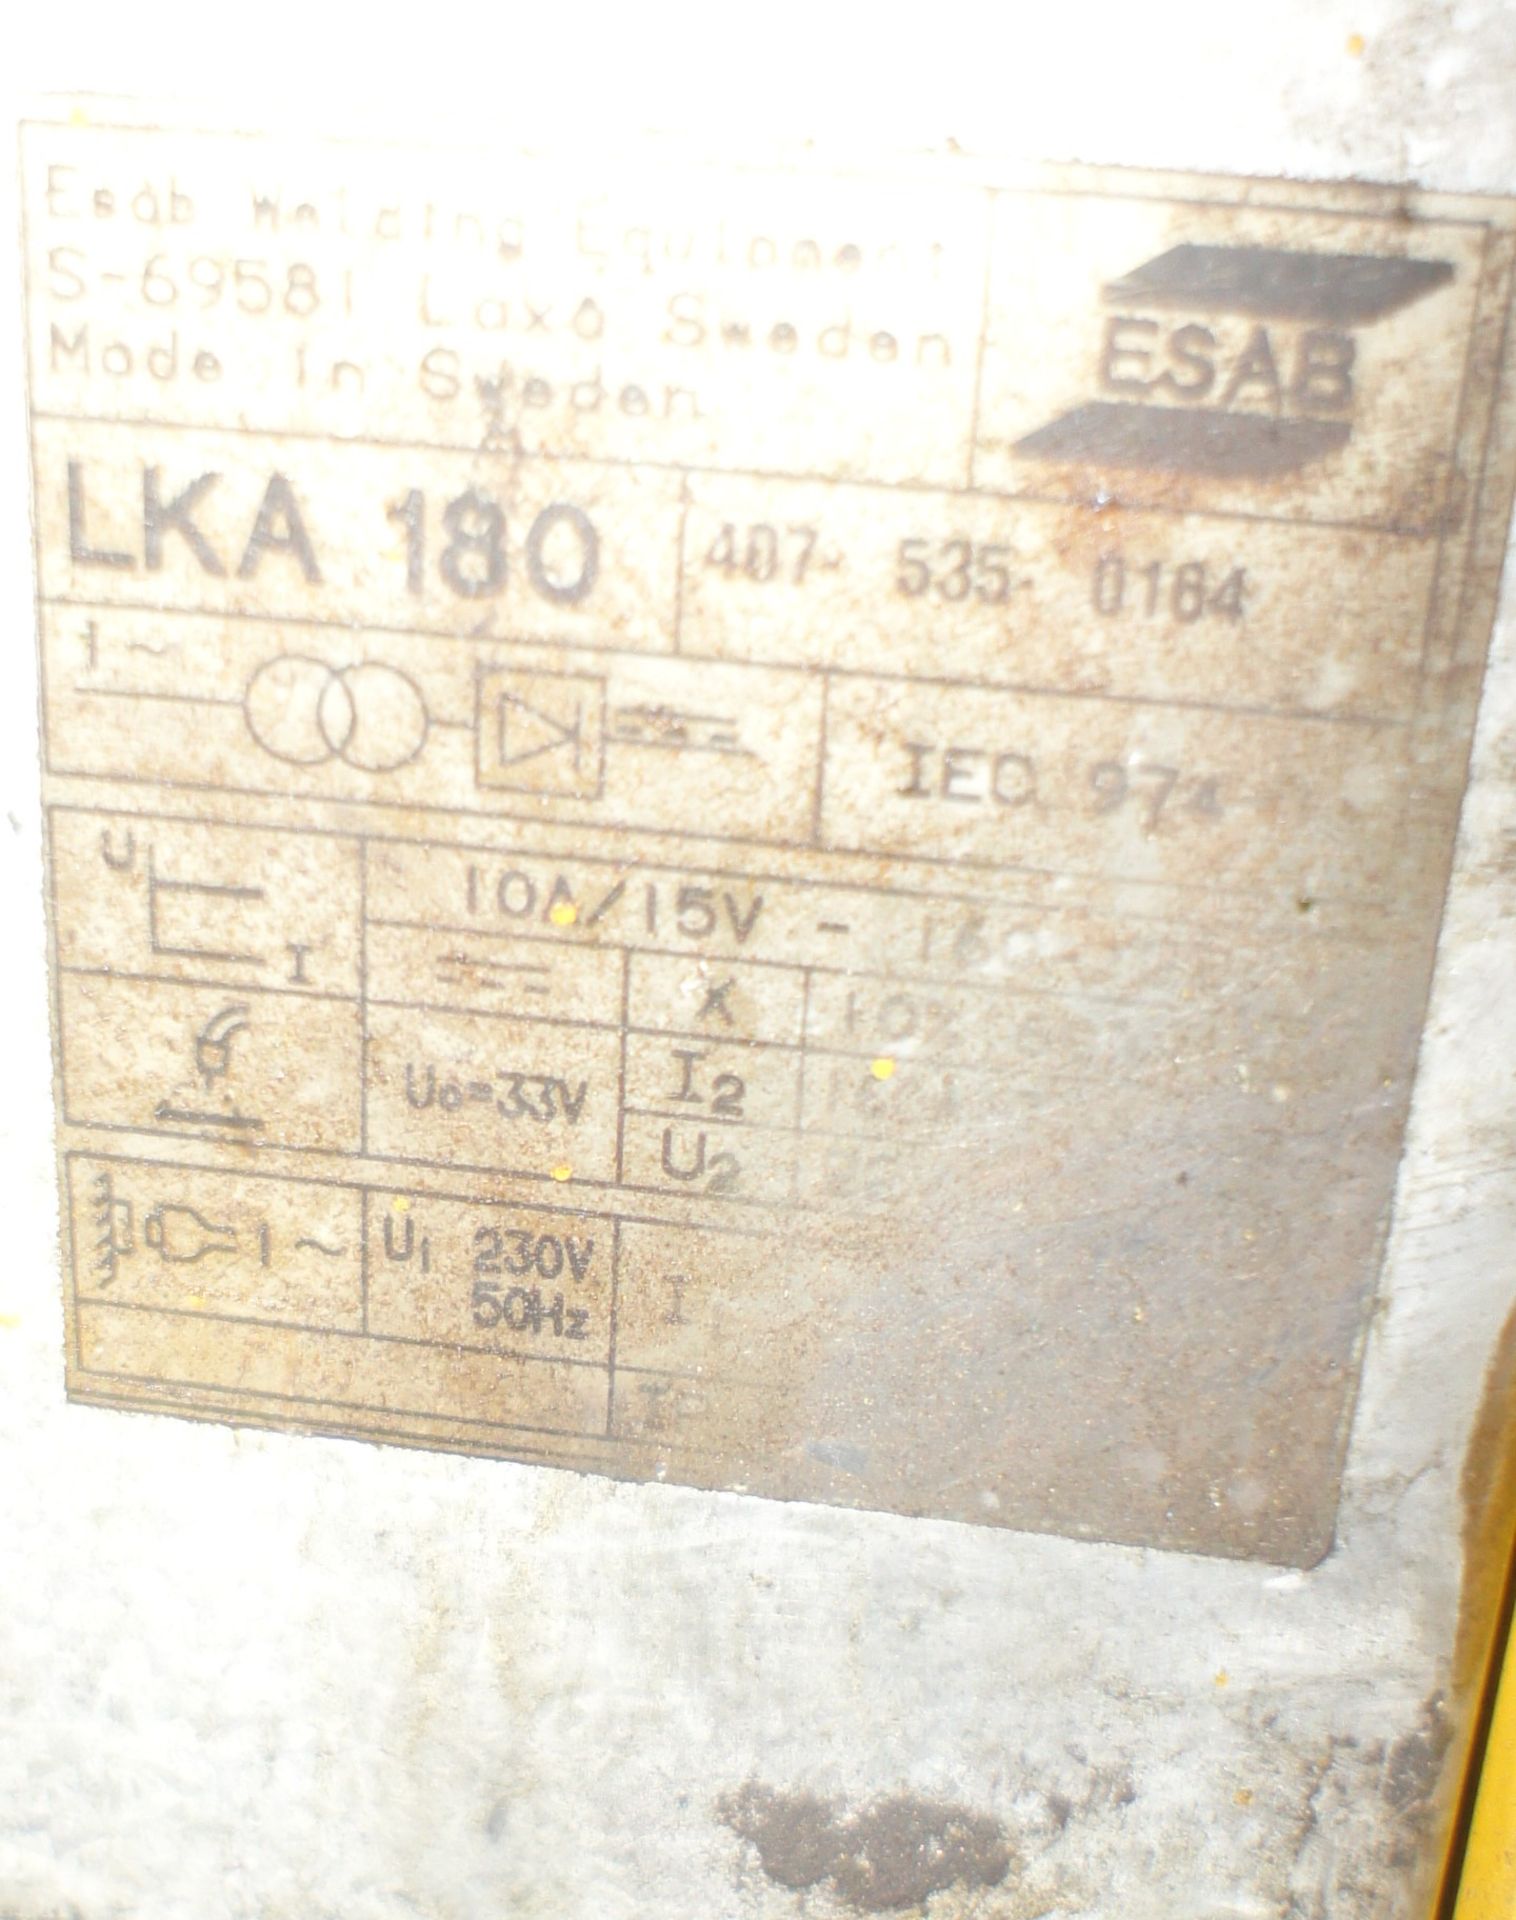 ESAB LKA 180 mig welder - Image 3 of 4